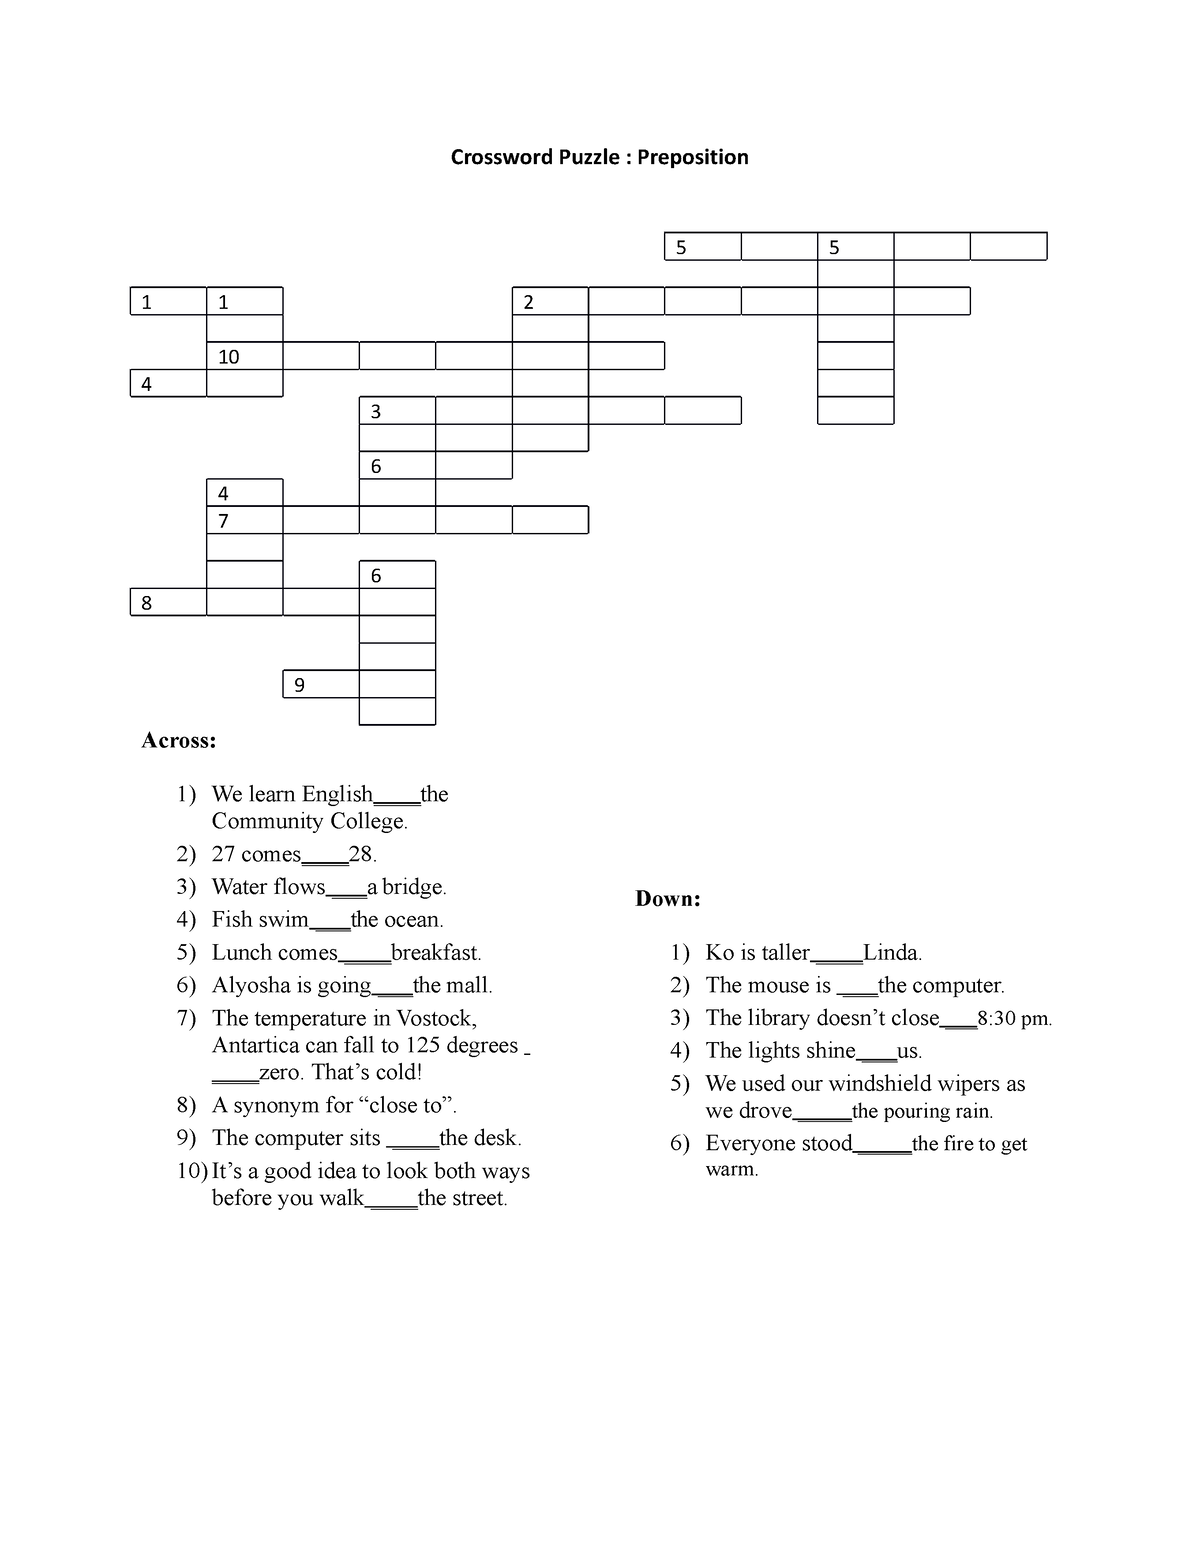 Crossword Puzzle Preposistion Crossword Puzzle : Preposition 5 5 1 1